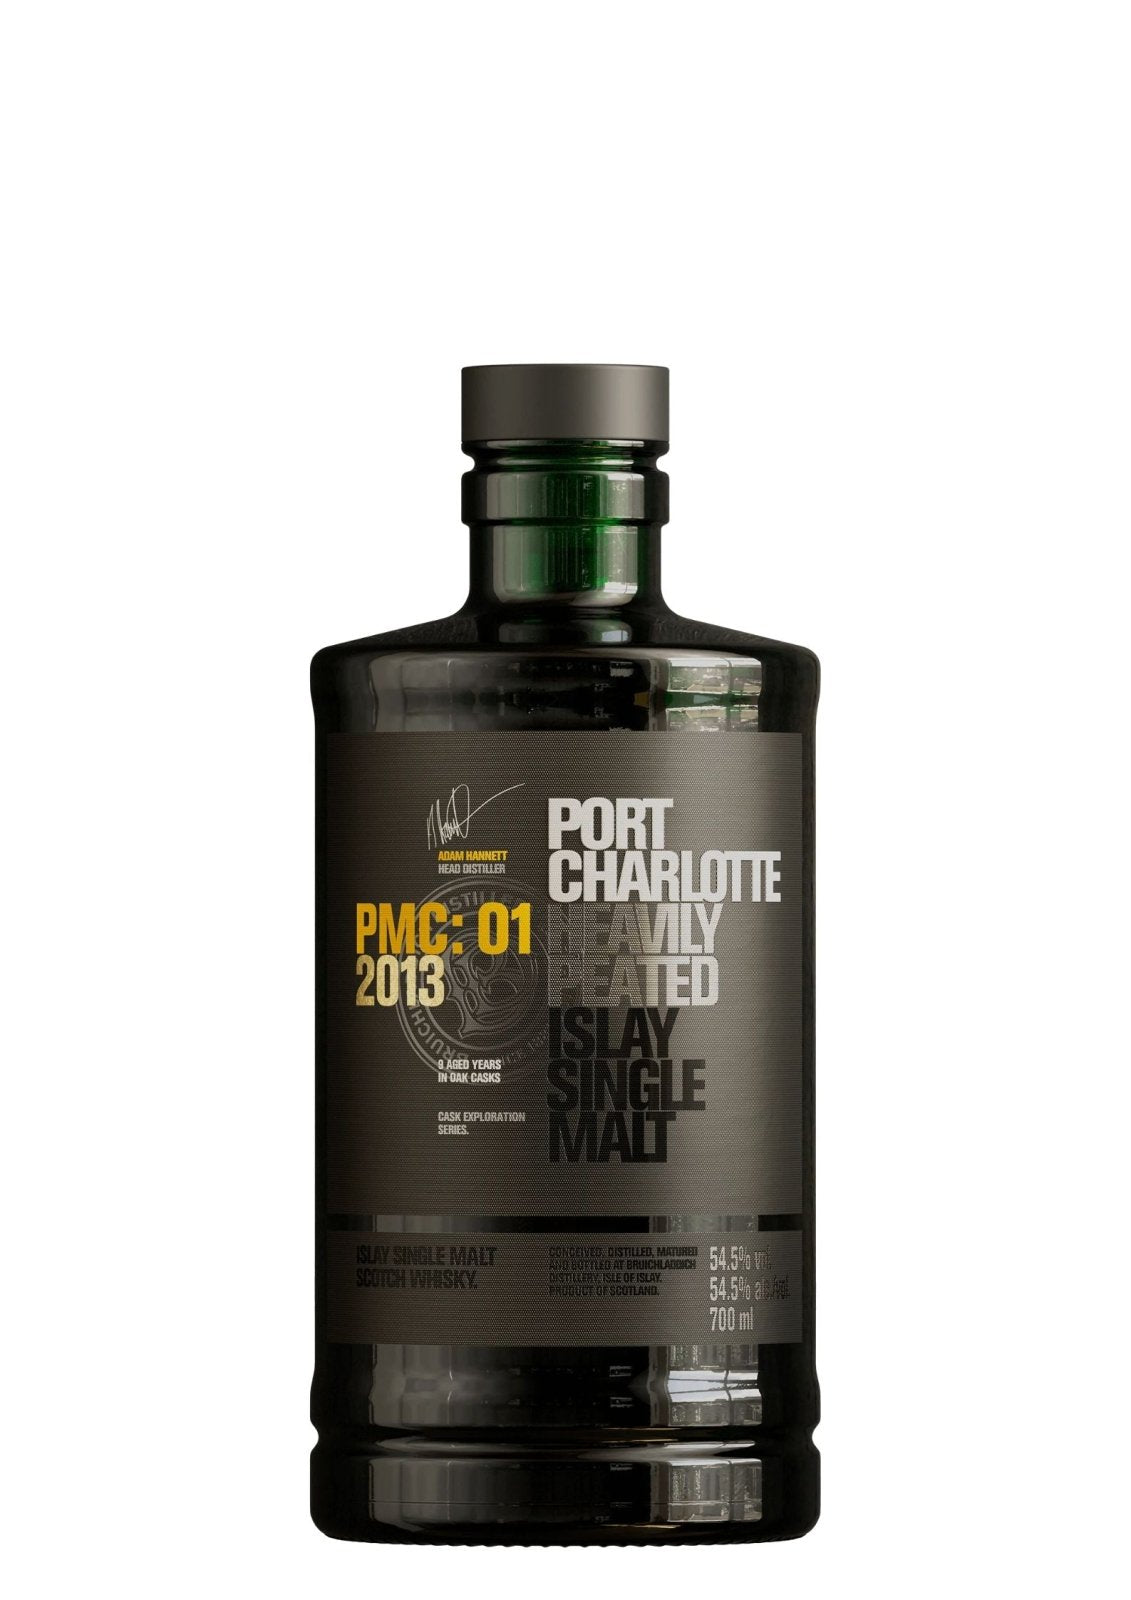 Bottle of Port Charlotte PMC:01 2013 Pomerol Cask Islay Single Malt Whisky, 54.5%